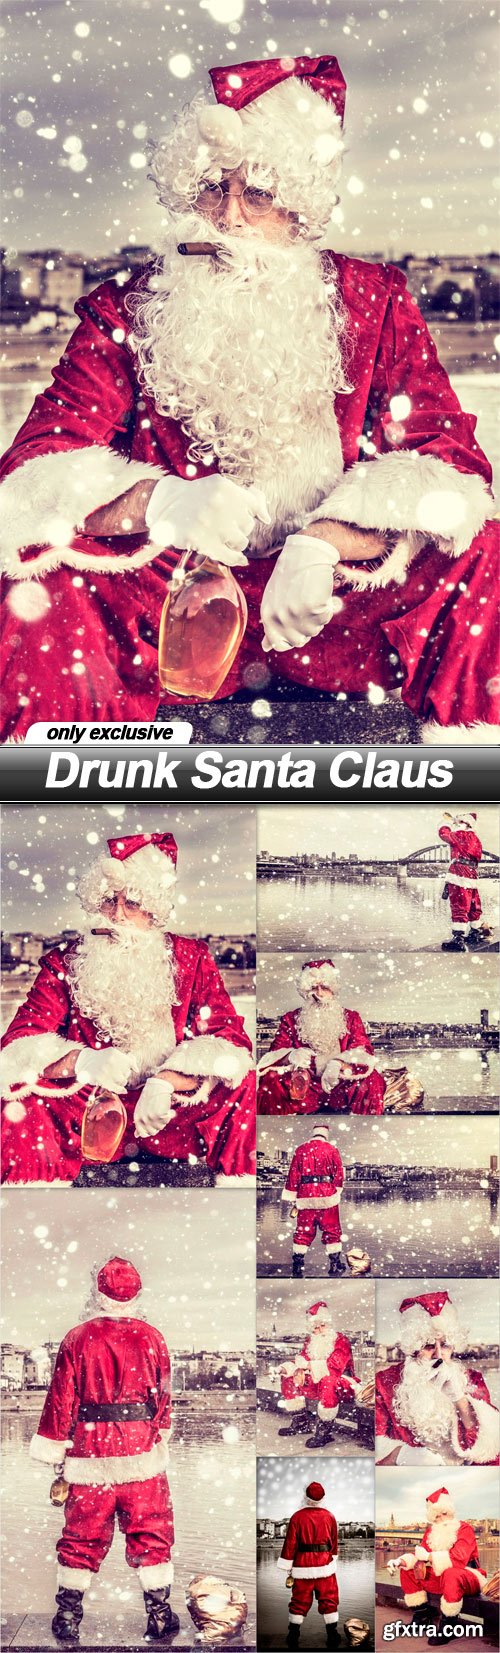 Drunk Santa Claus - 9 UHQ JPEG